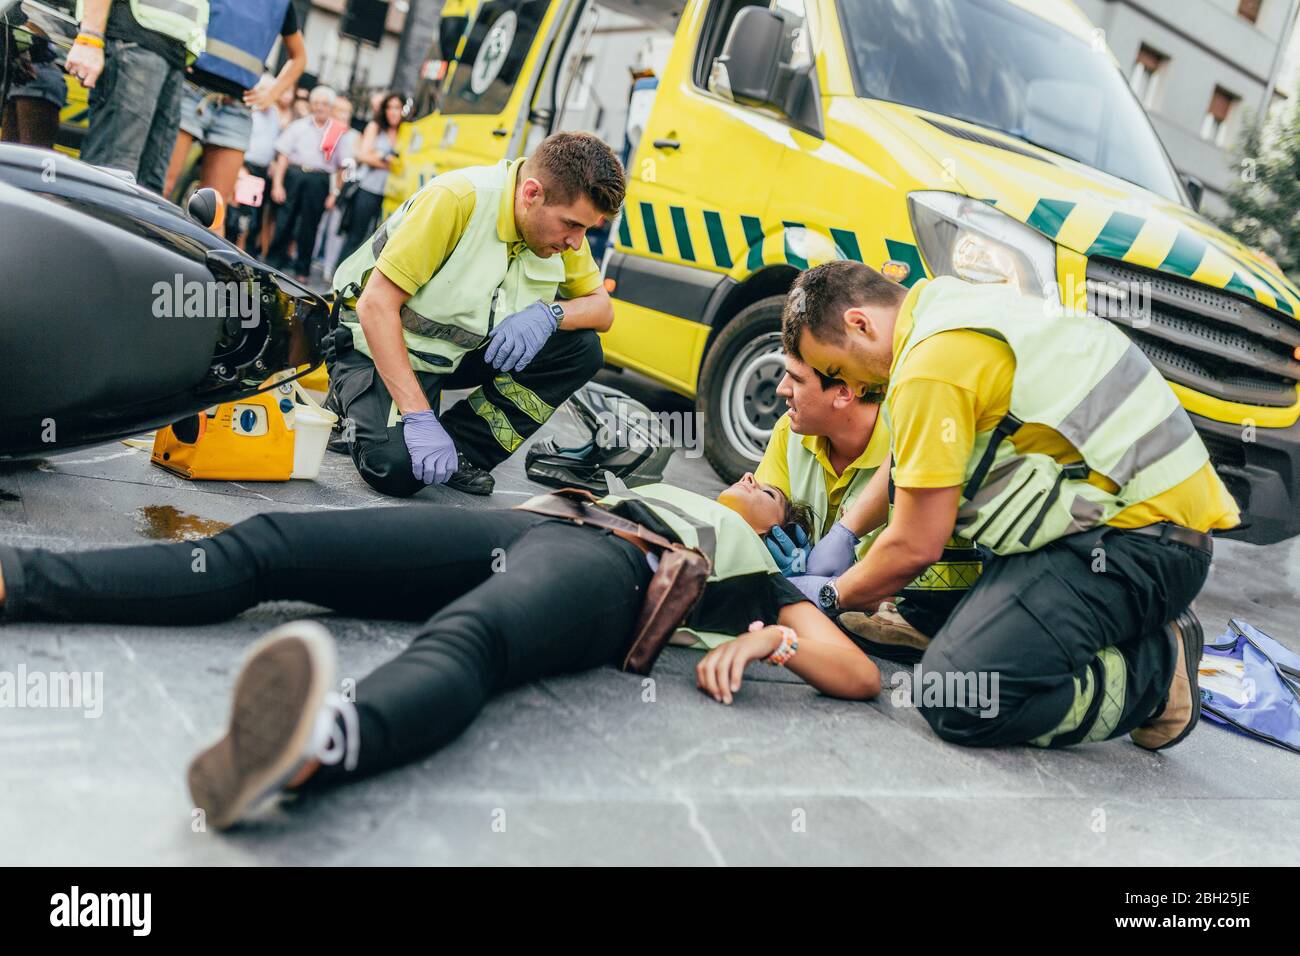 Paramedics helping crash victim after scooter accident Stock Photo